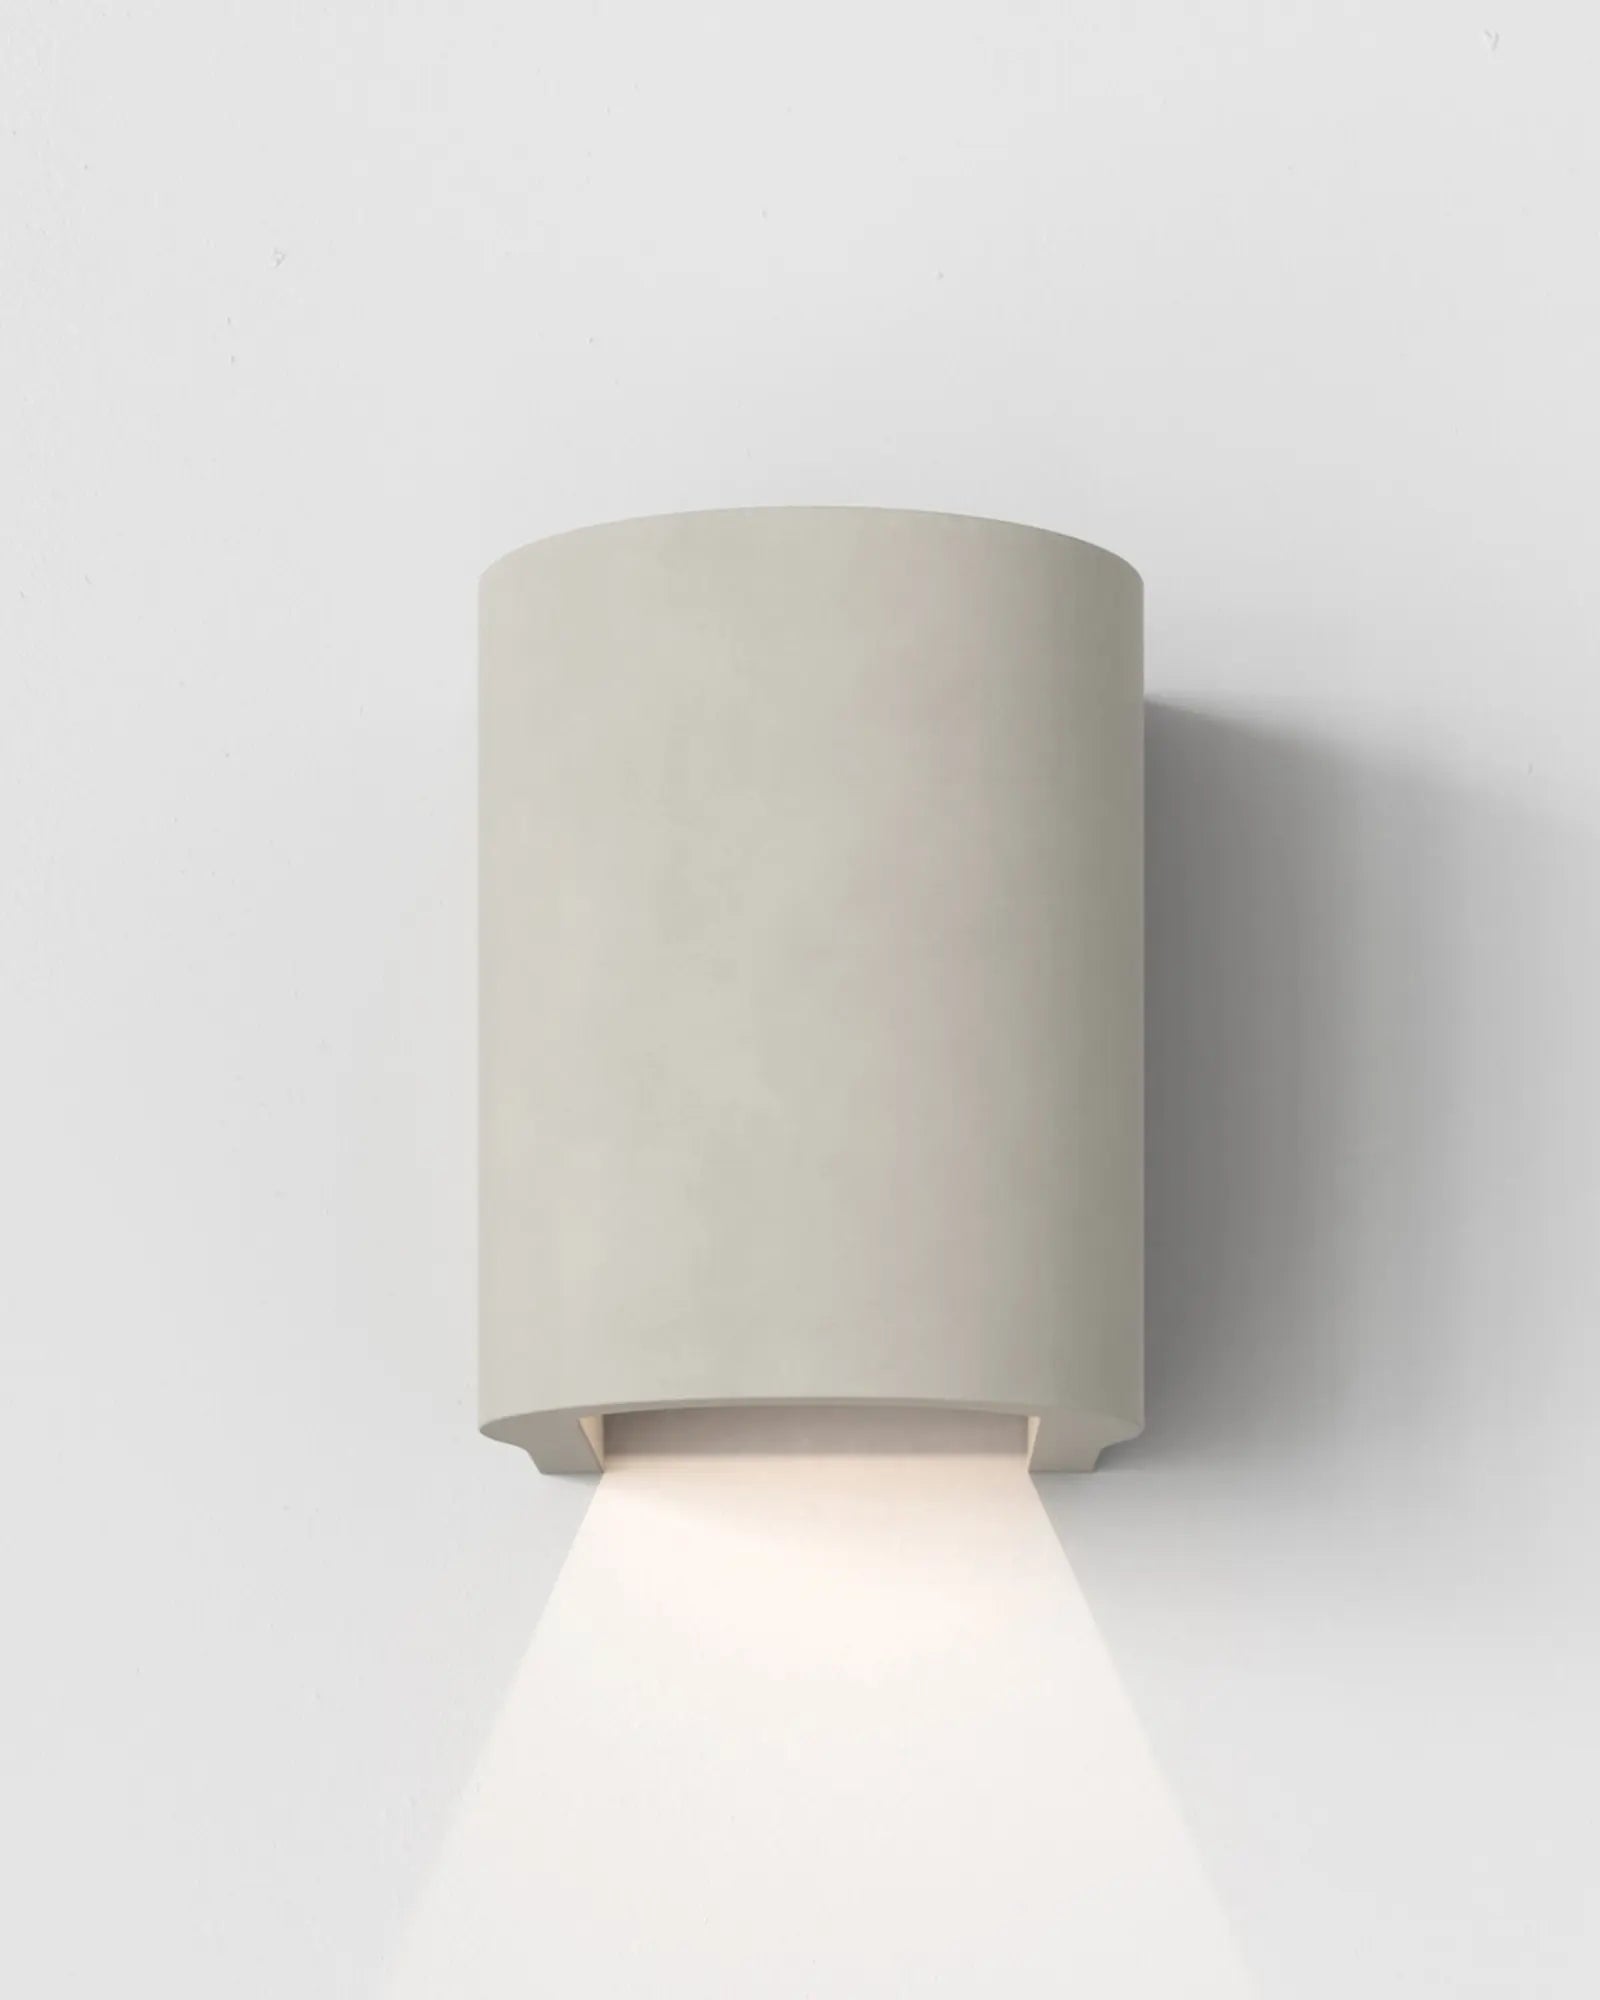 Dunbar Concrete minimalistic outdoor wall light small